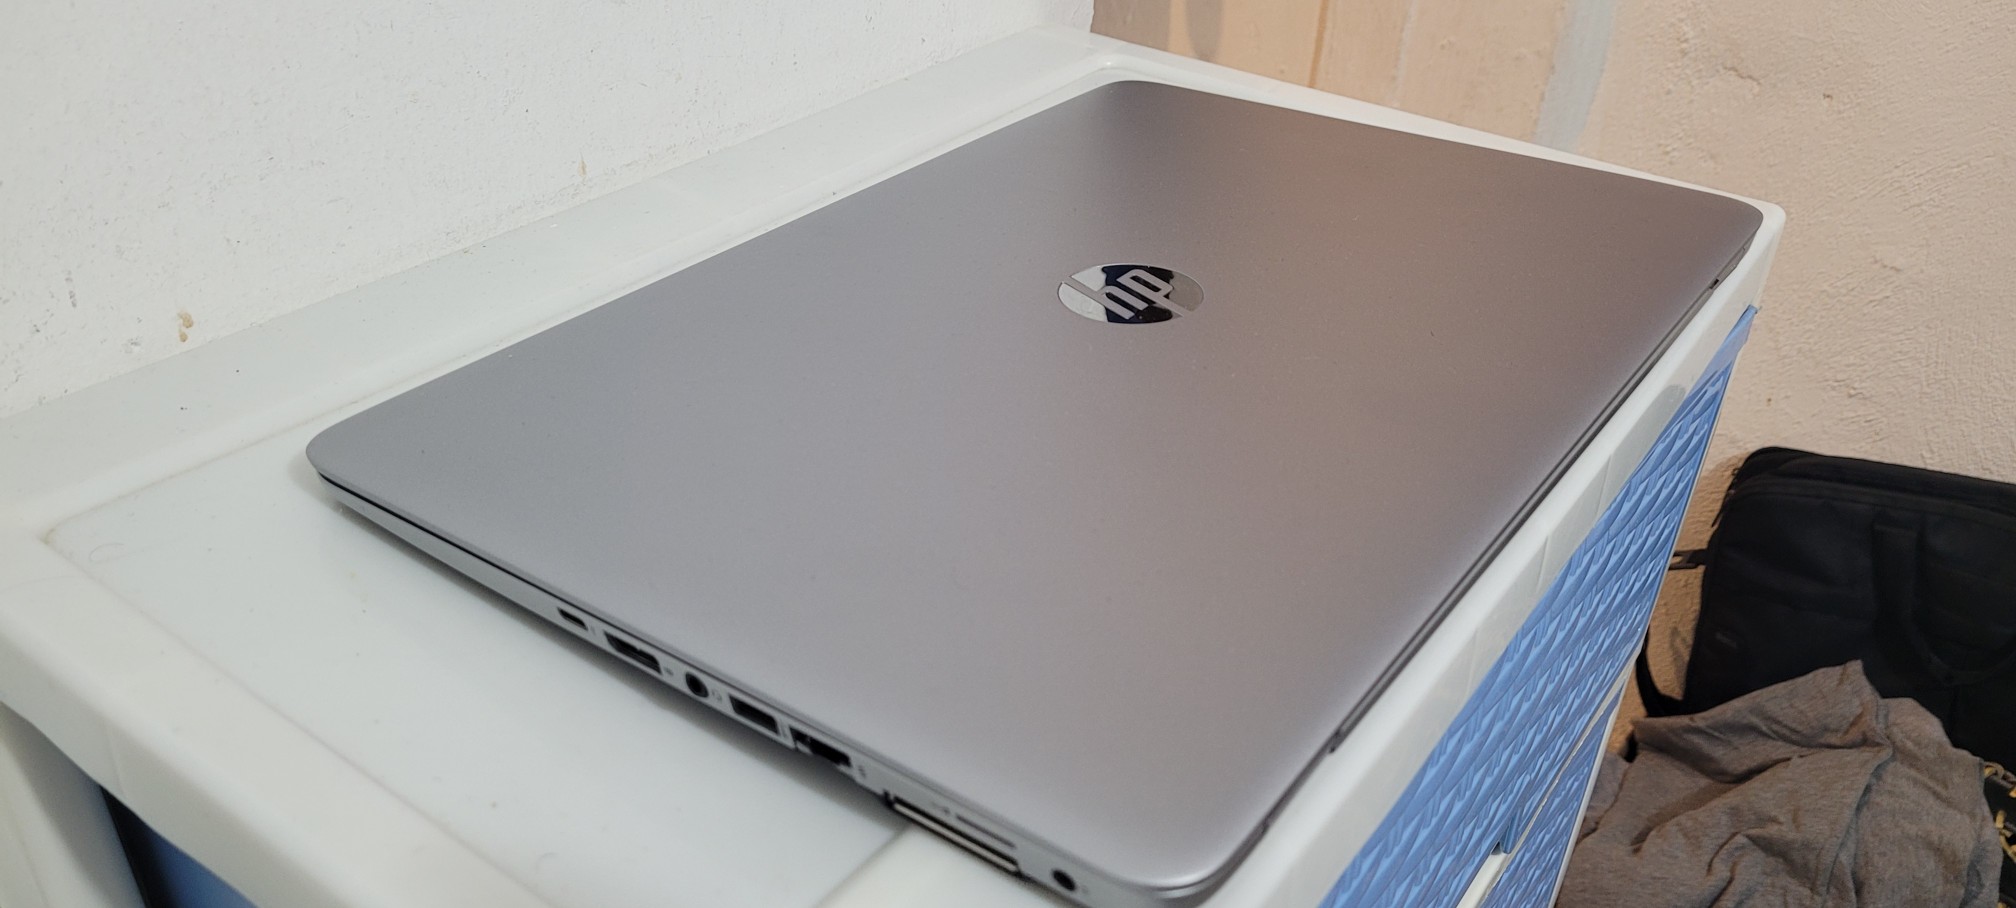 computadoras y laptops - Laptop hp Touch Core i5 7ma Ram 8gb ddr4 Disco 500gb Full 2